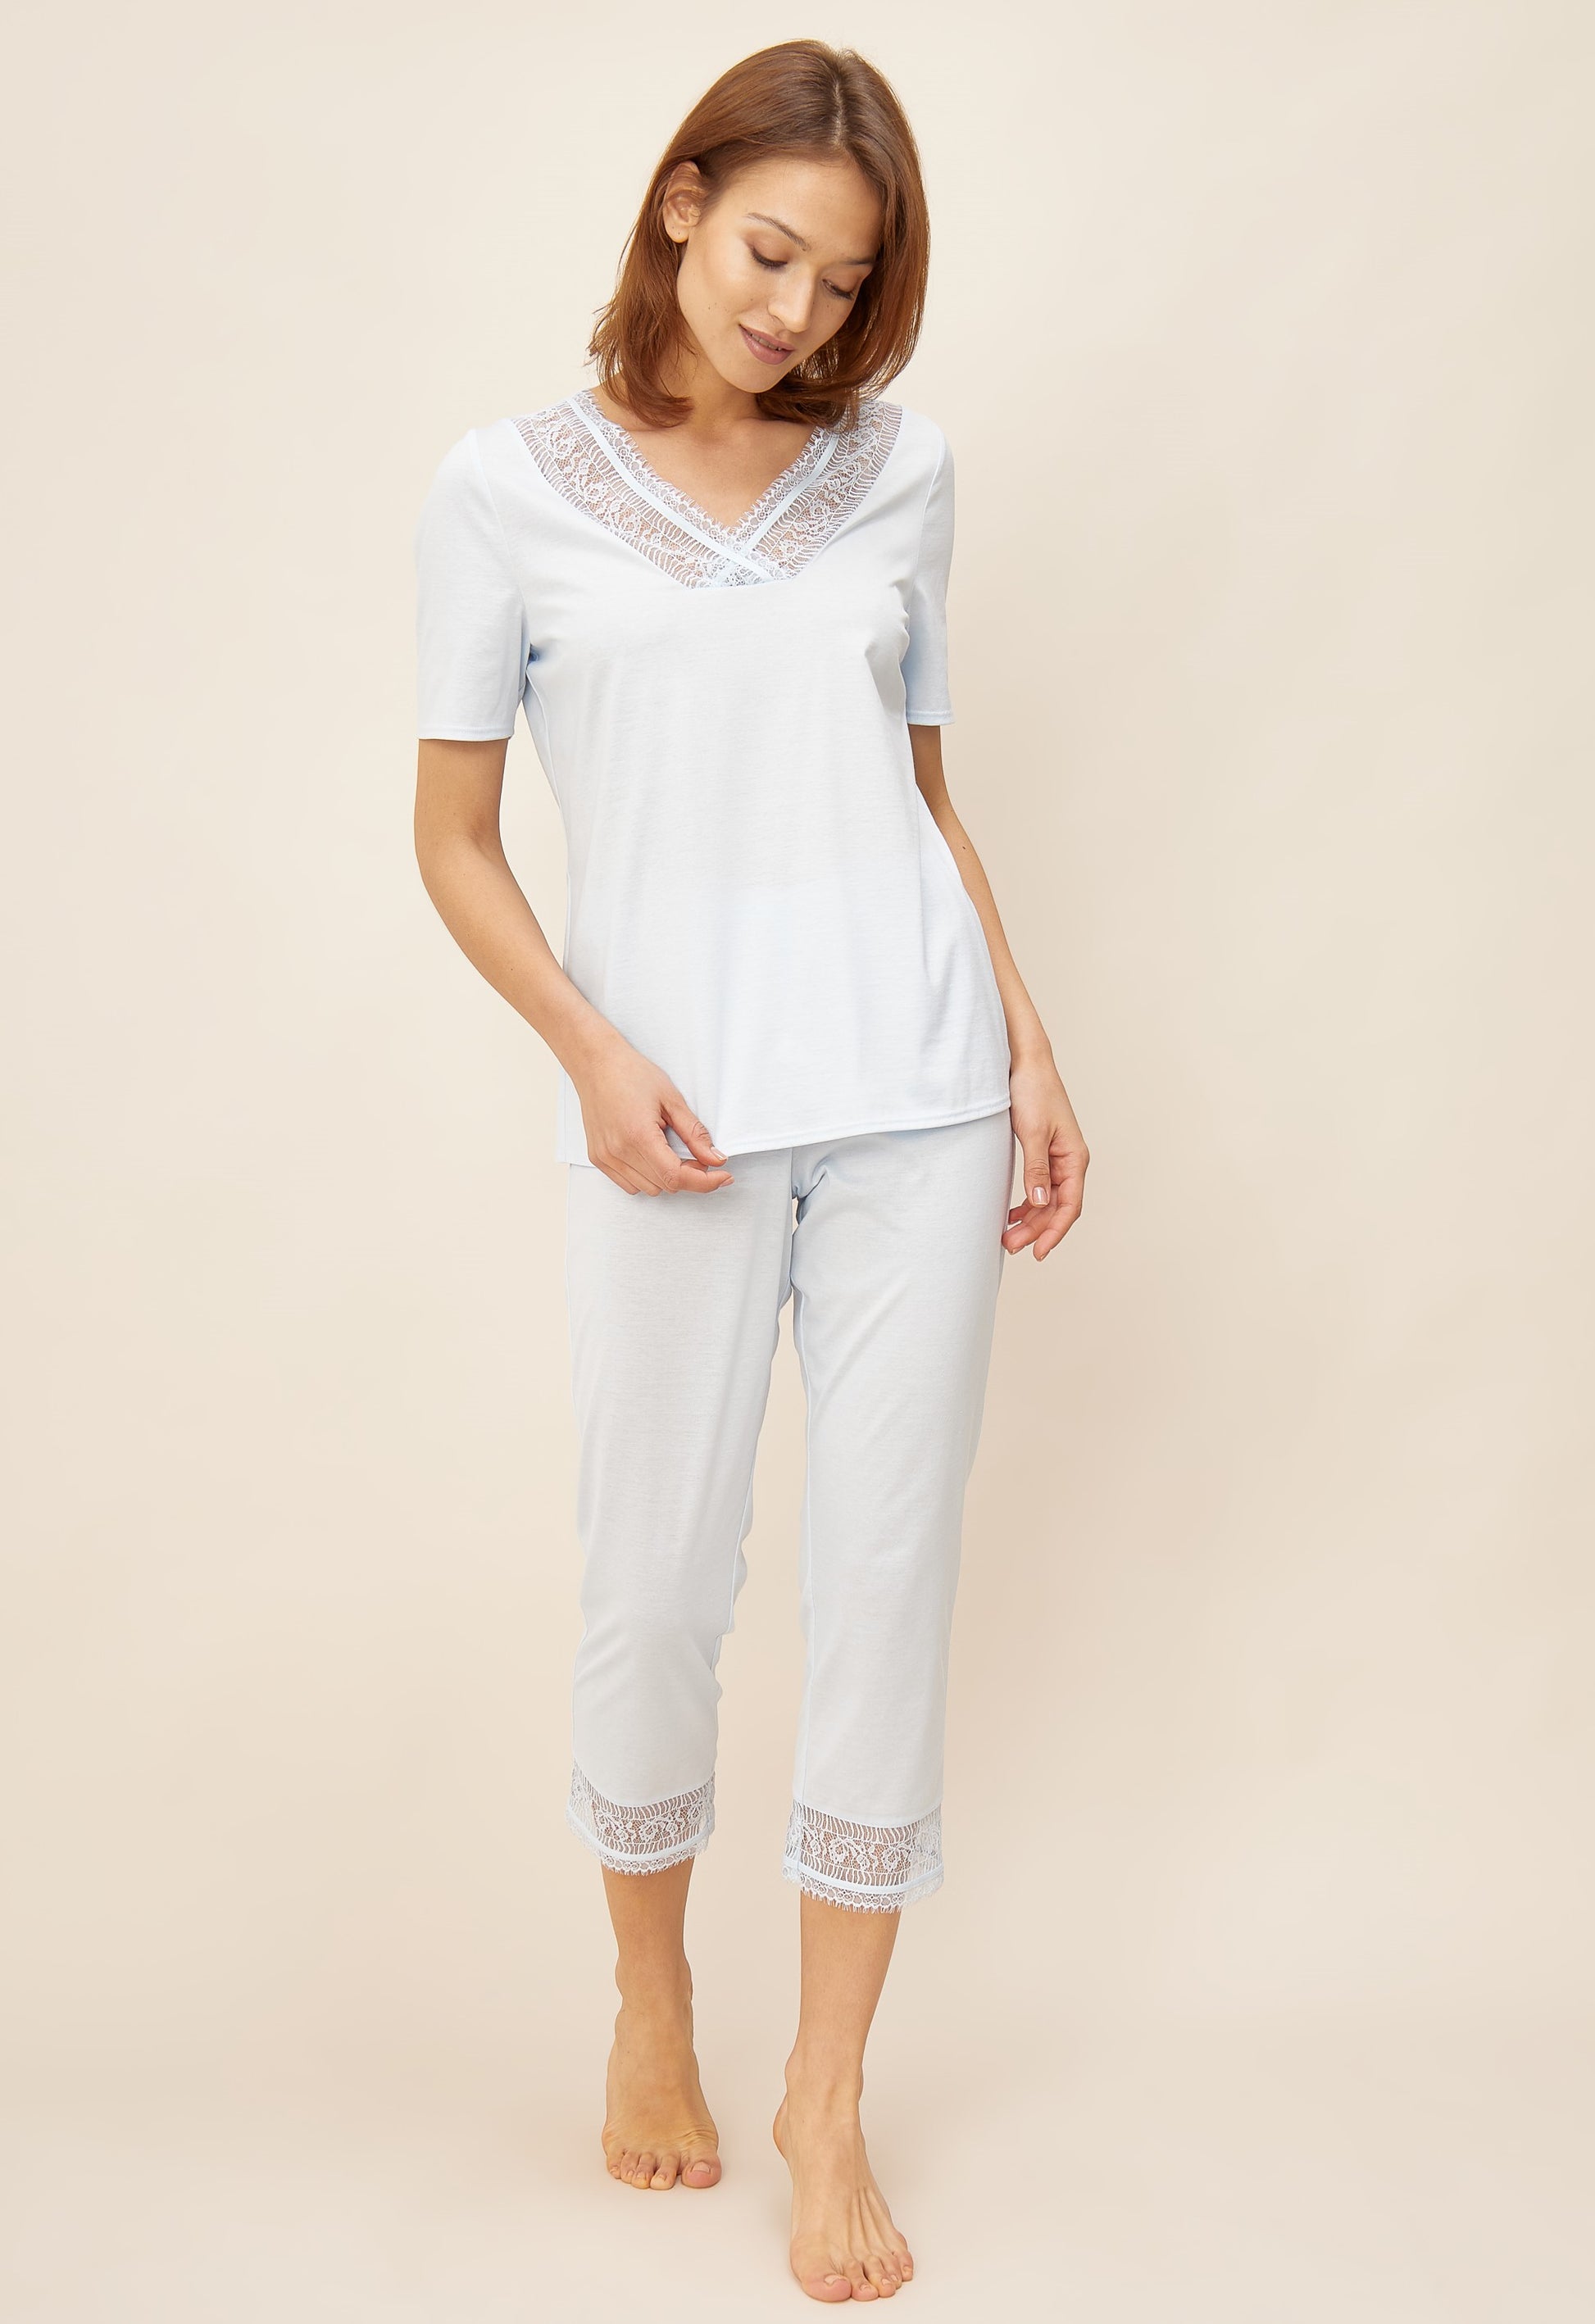 Lux Lace Cotton Capri Pajama Set